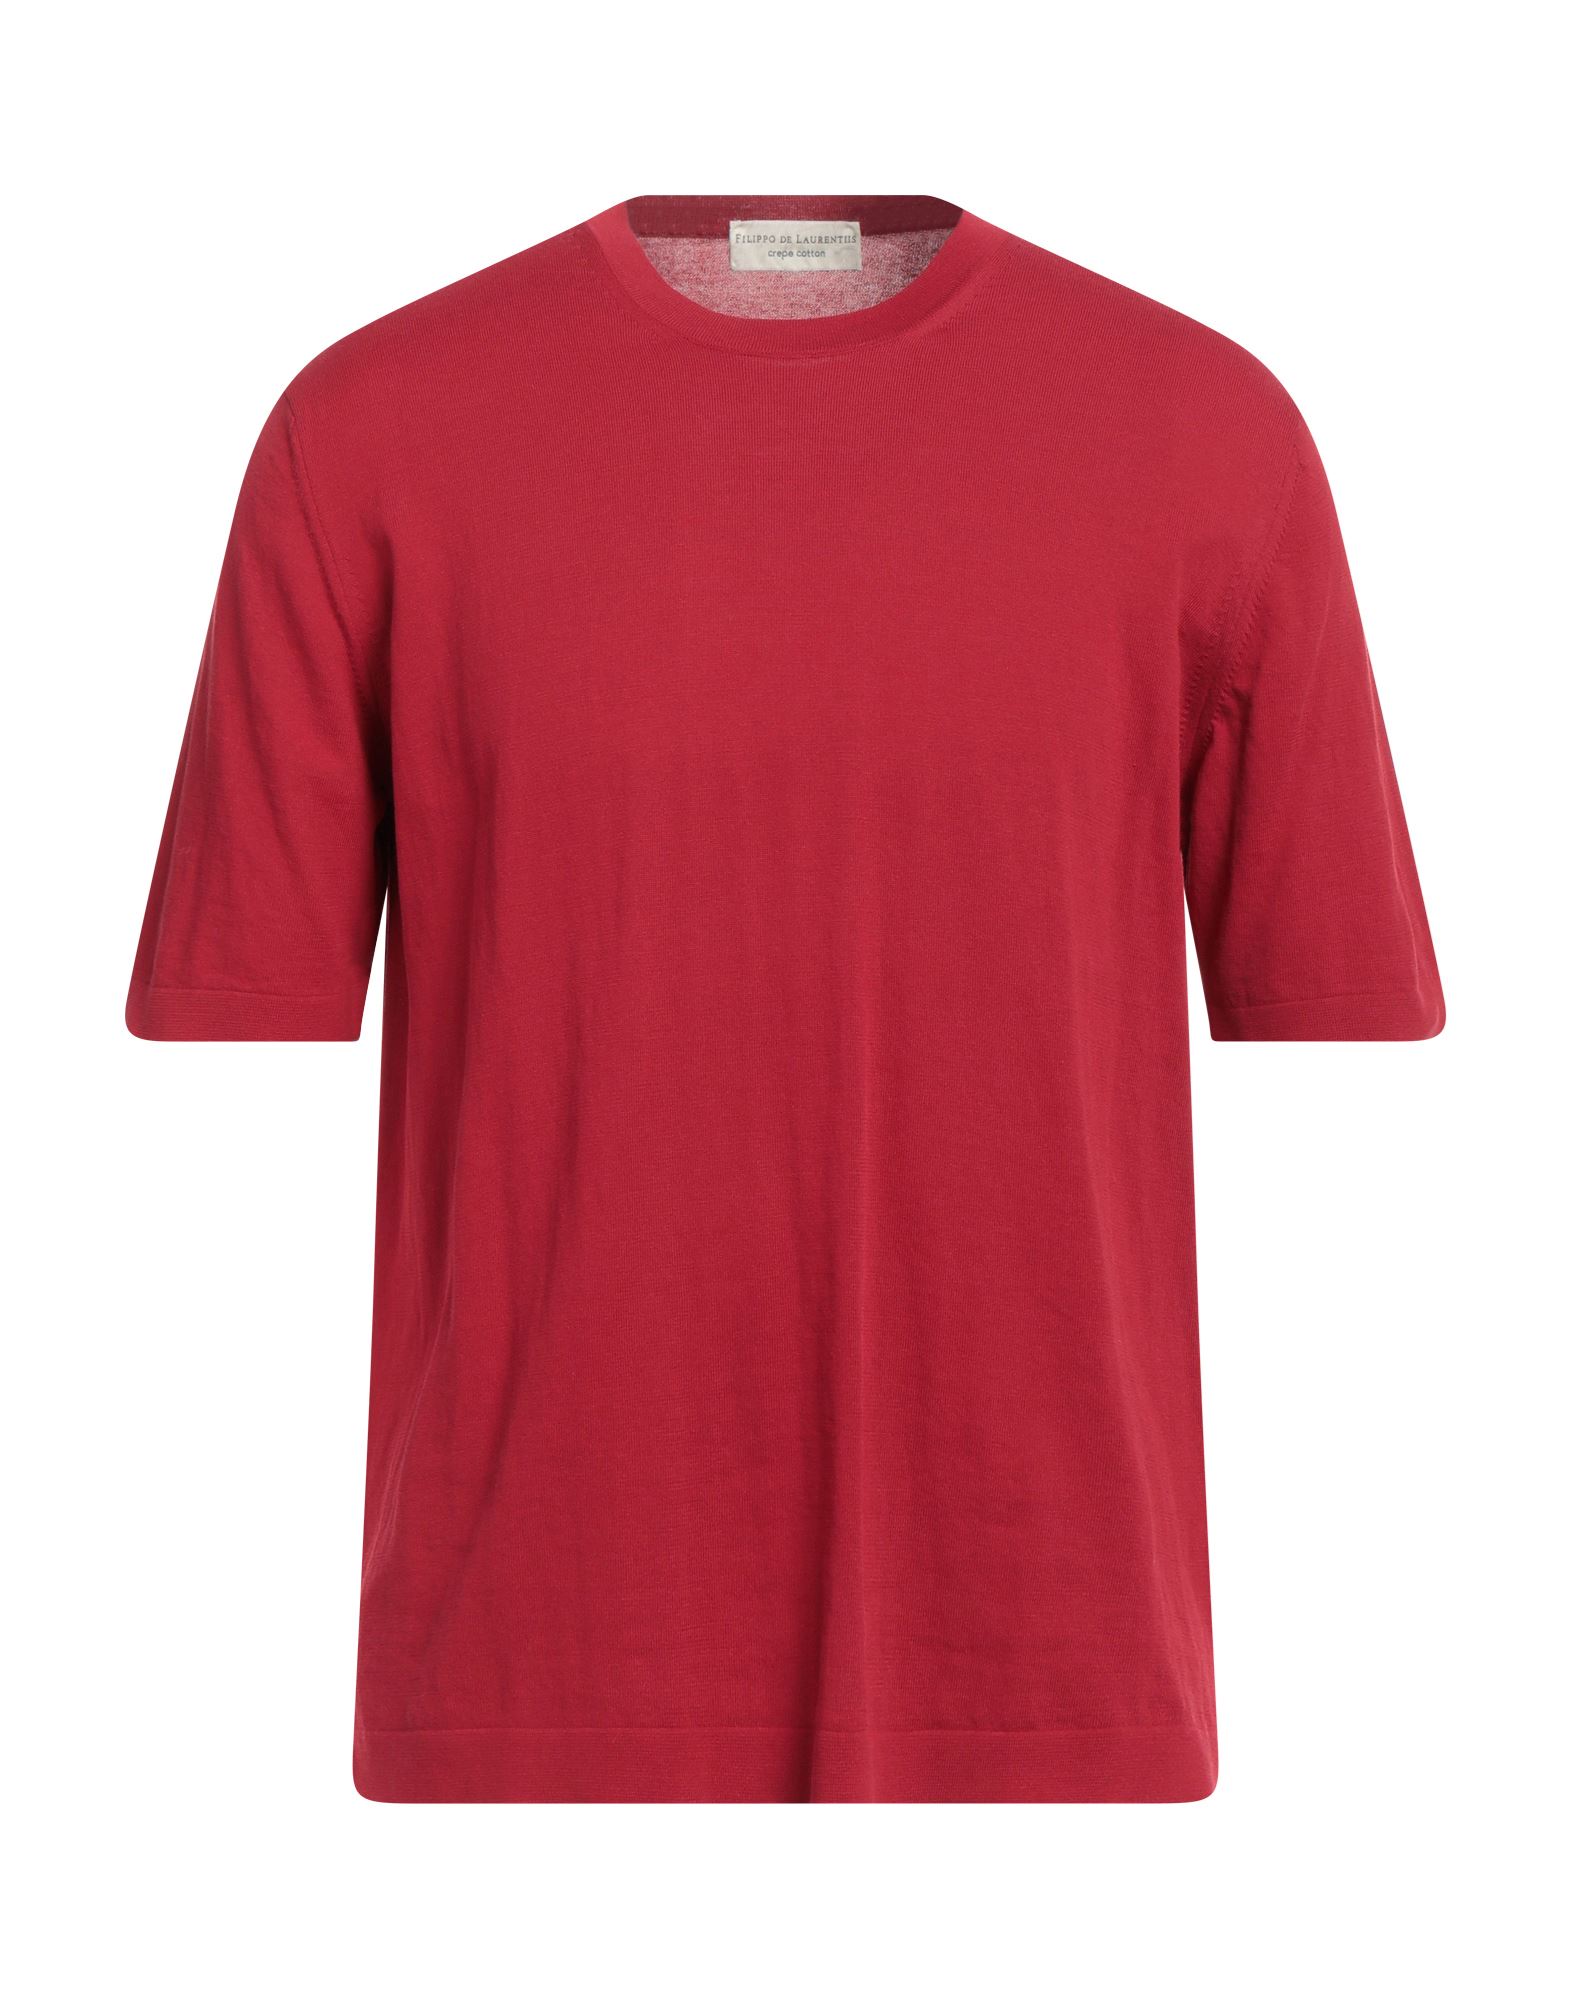 Filippo De Laurentiis Man Sweater Red Size 44 Cotton